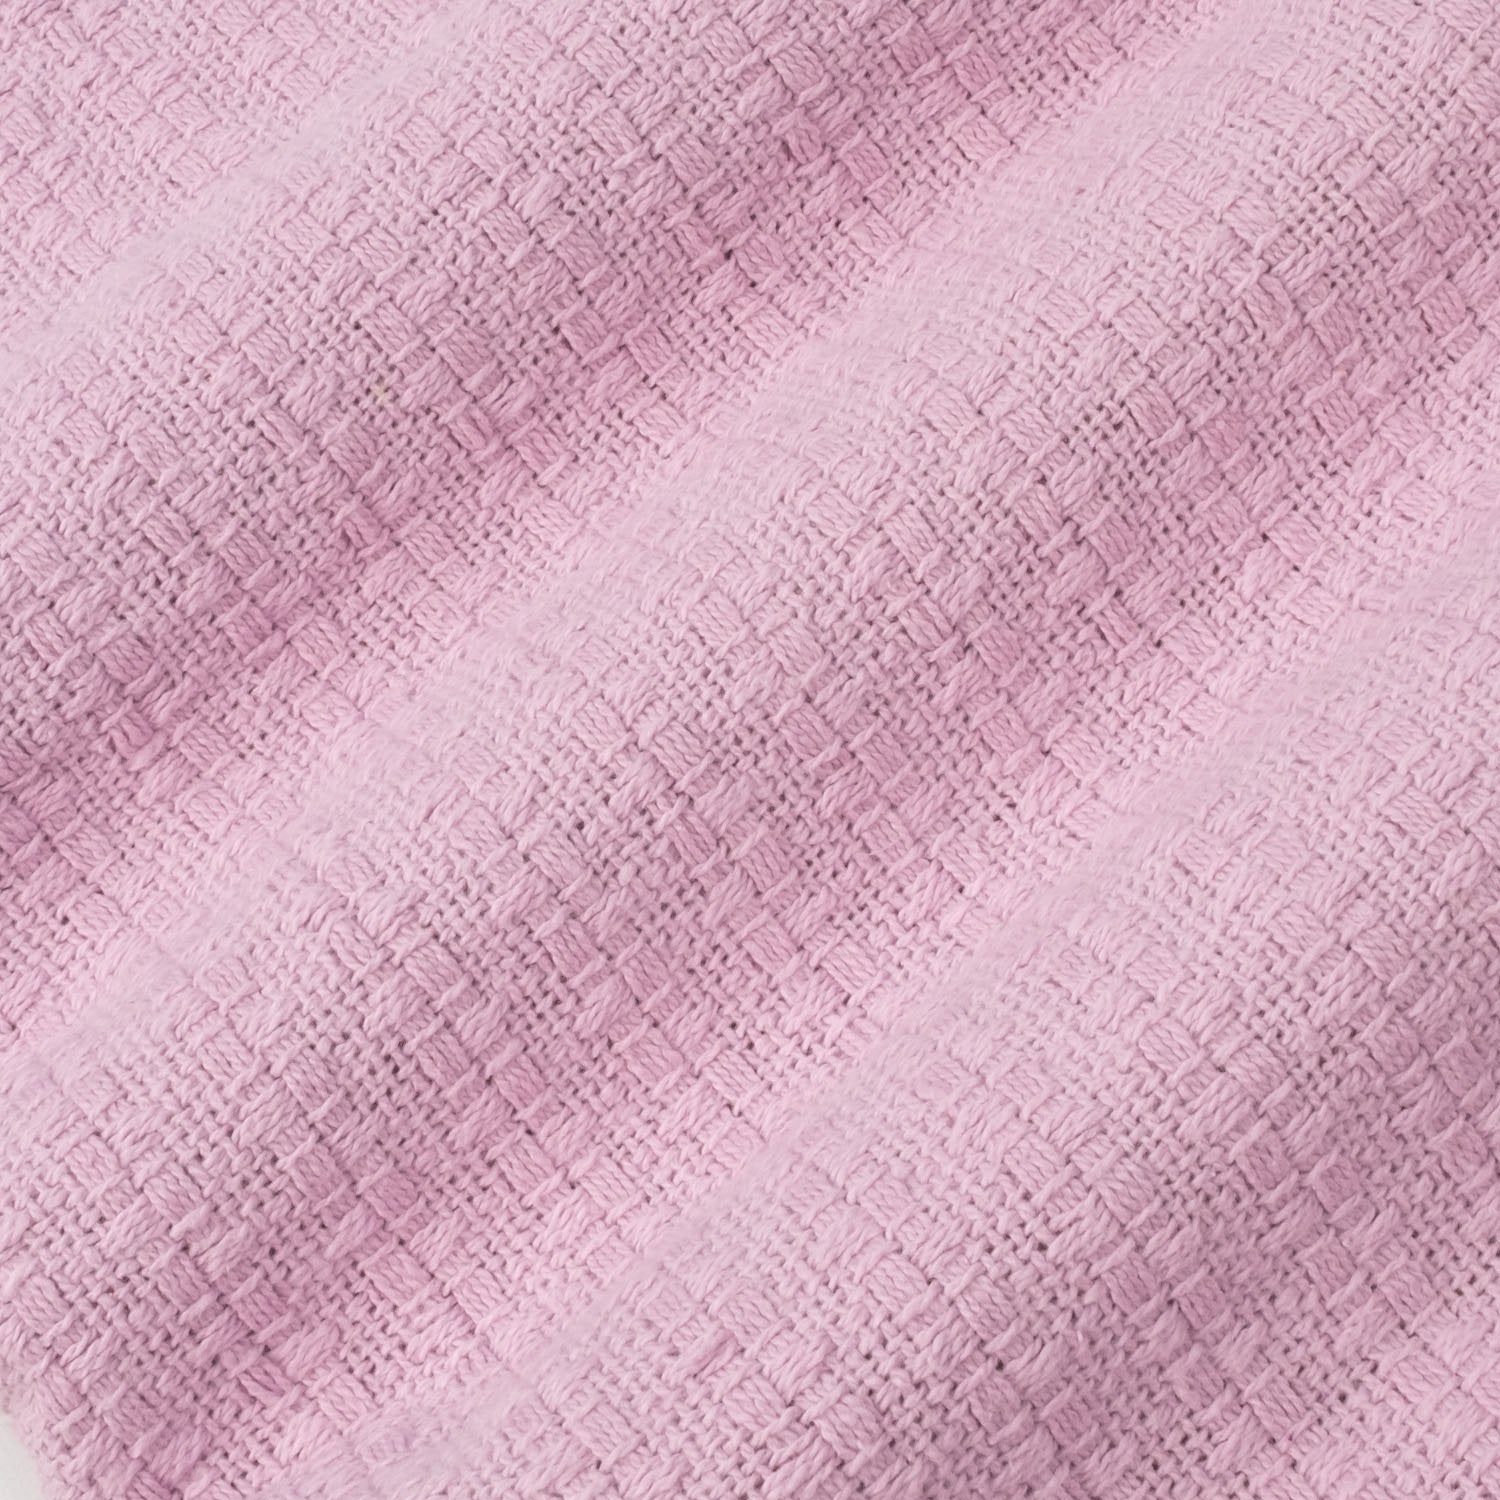 Basket Weave Cotton Blanket Pink - Fabric